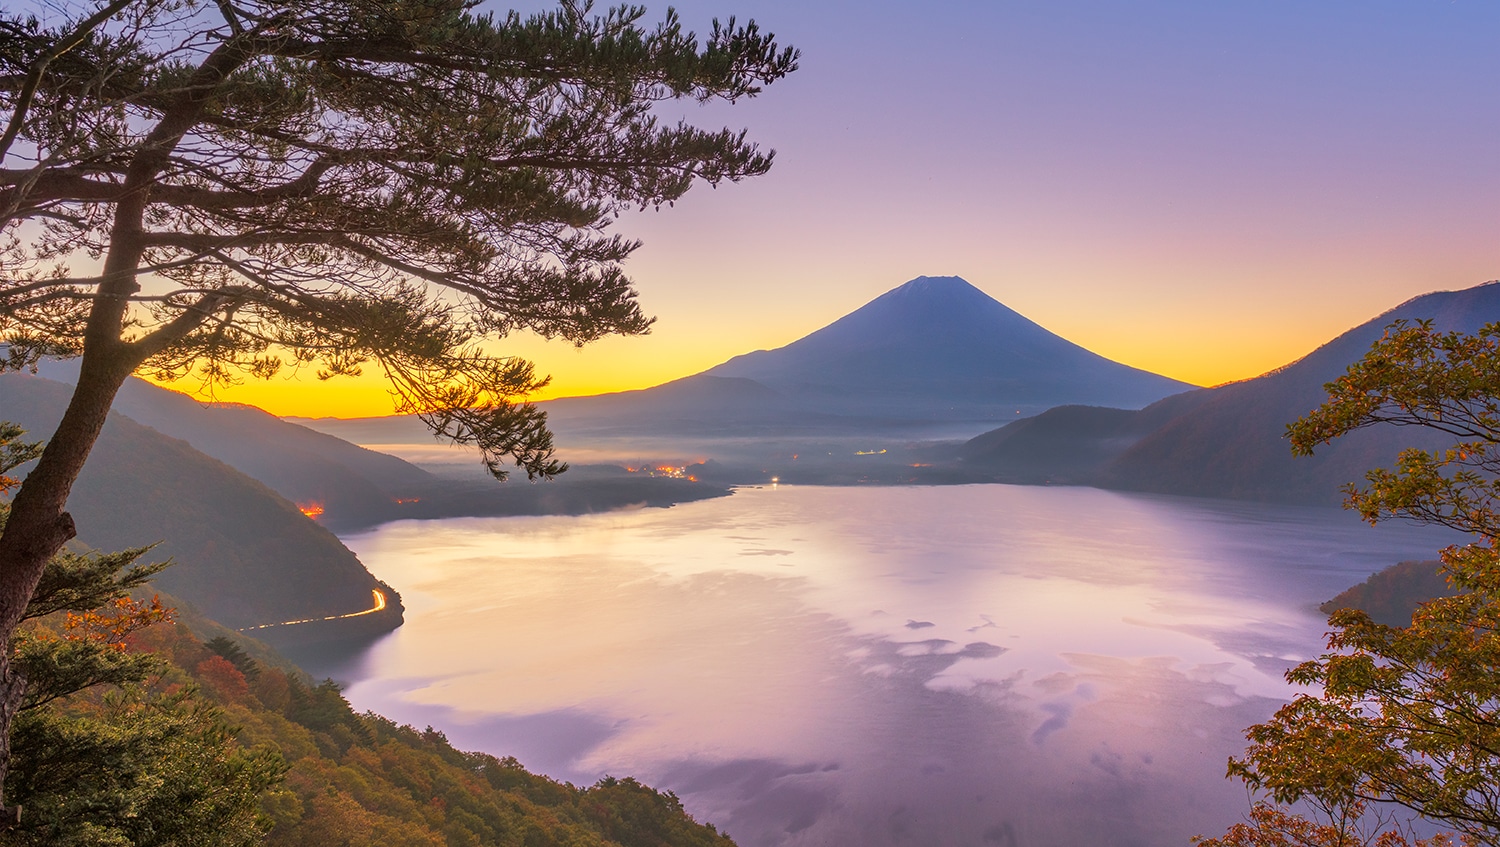 View of Mt Fuji from Lake Motosu